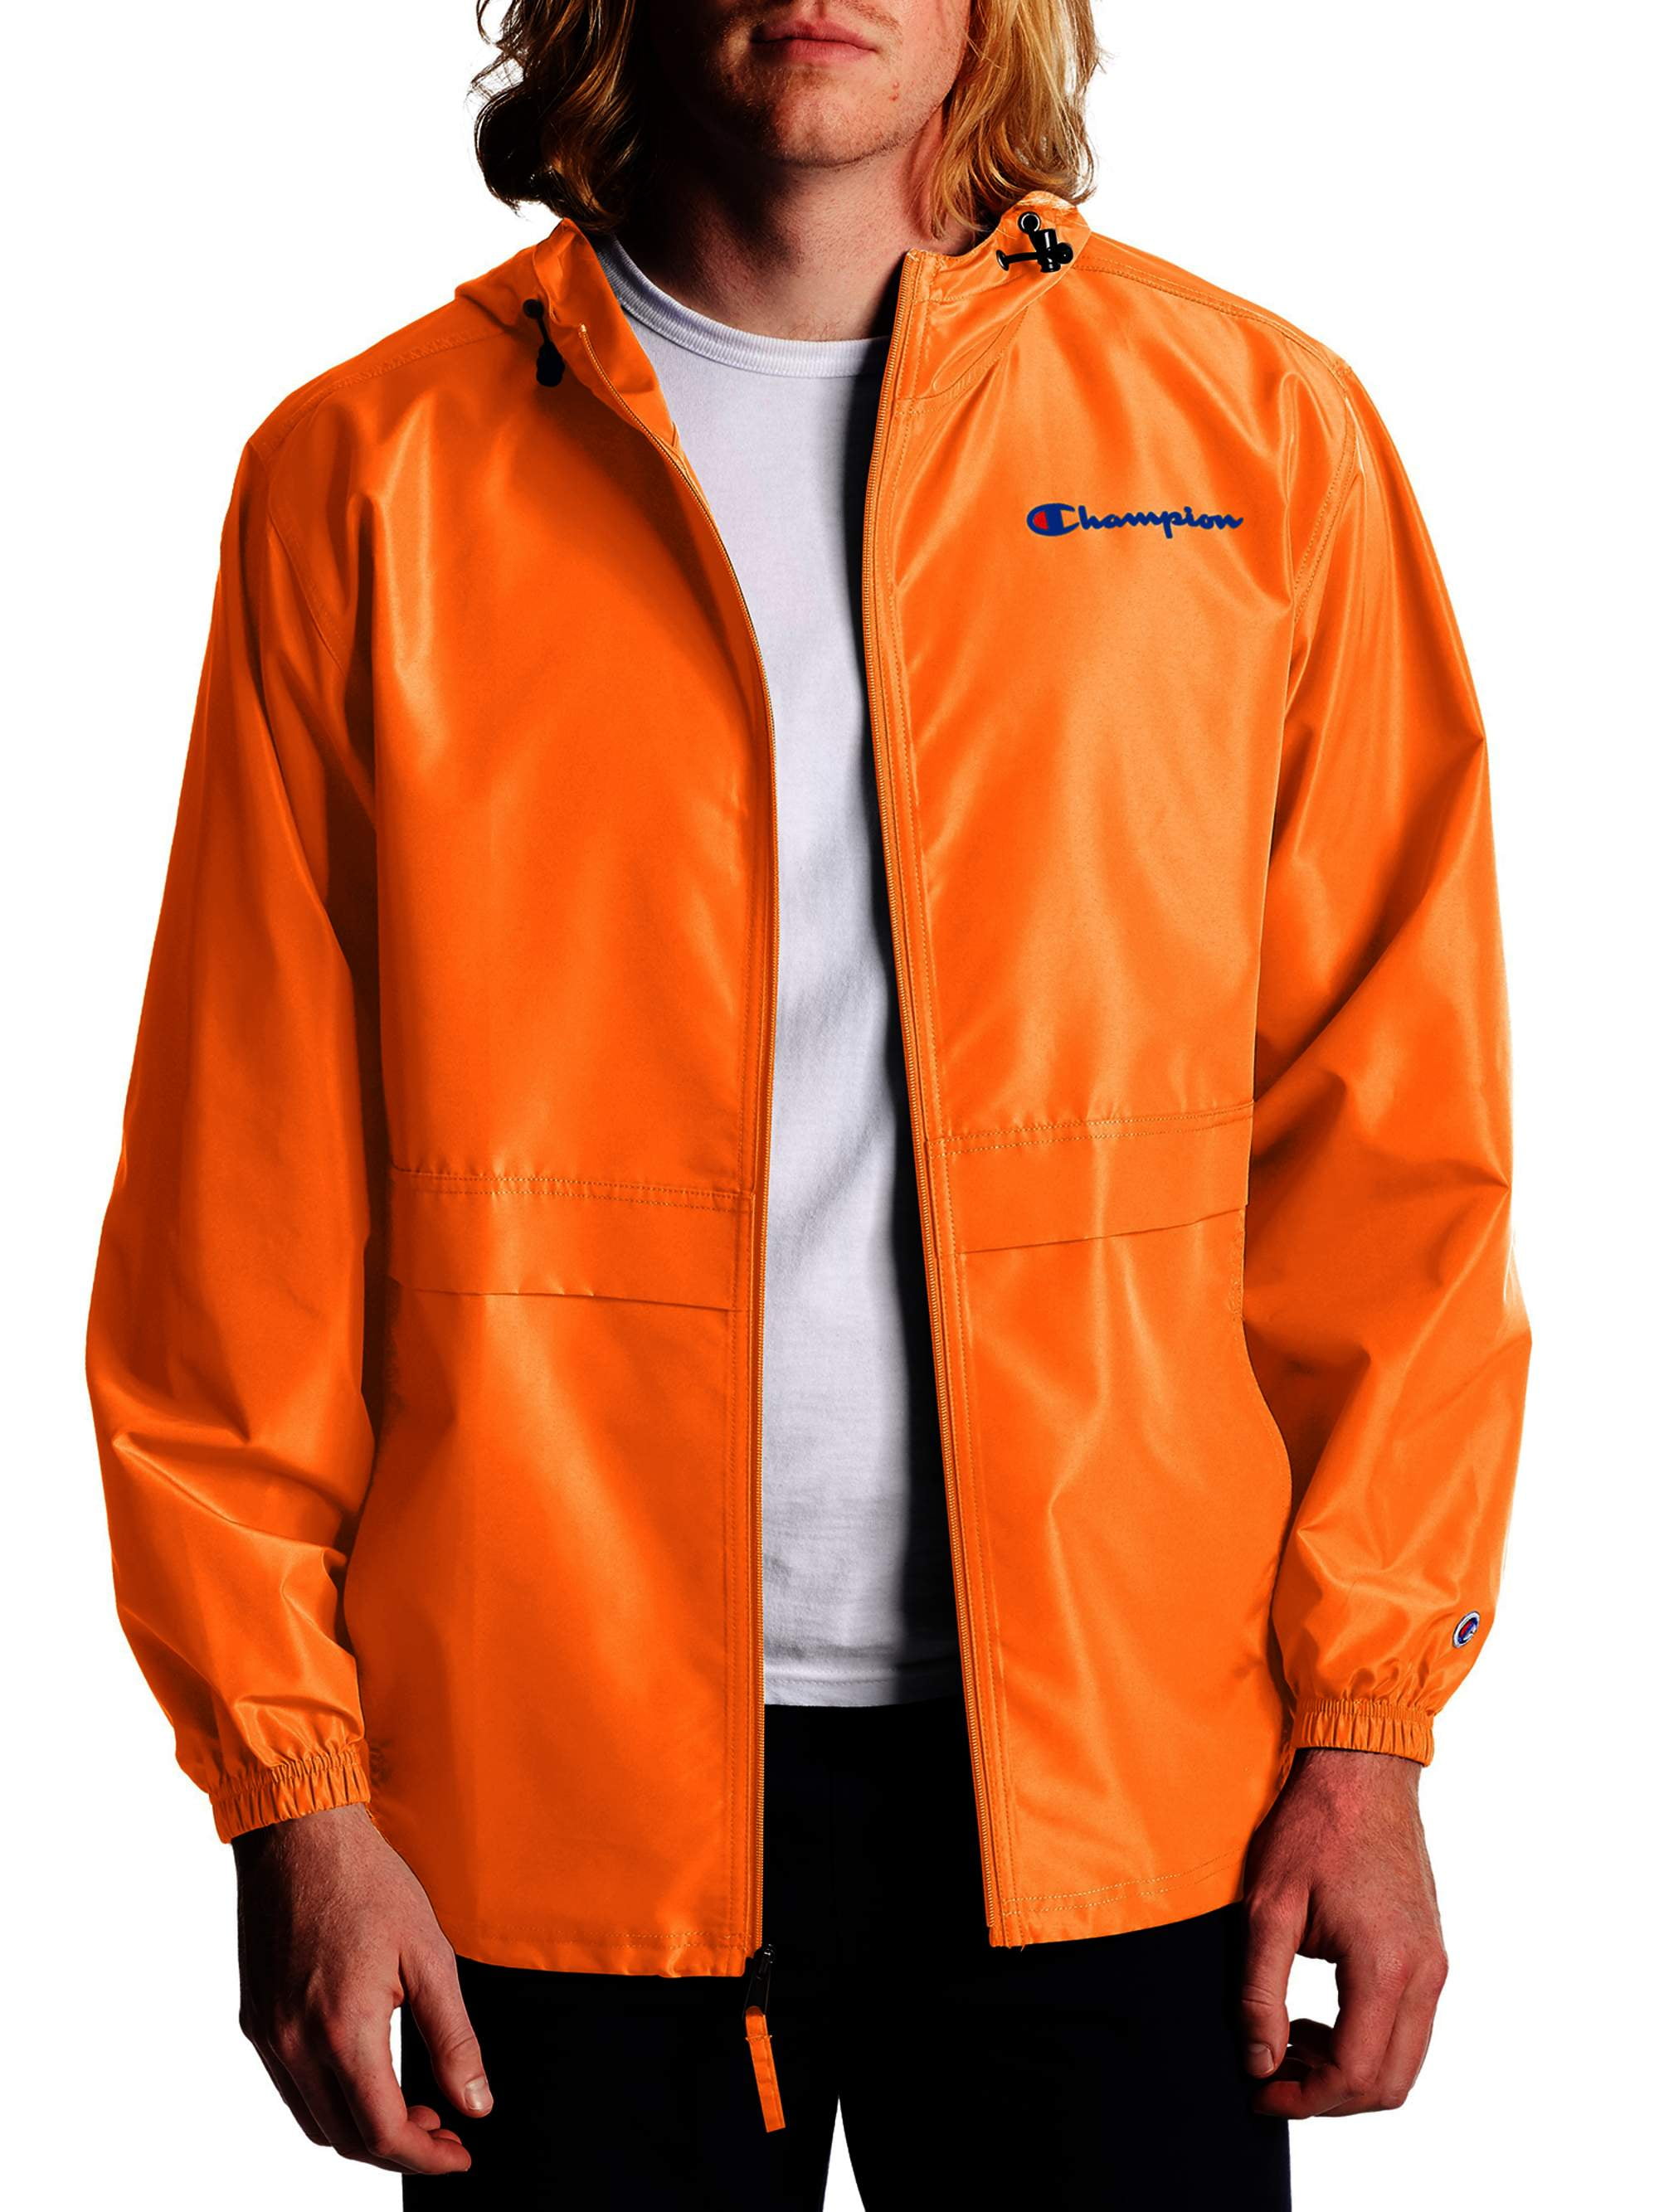 champion jacket mens orange